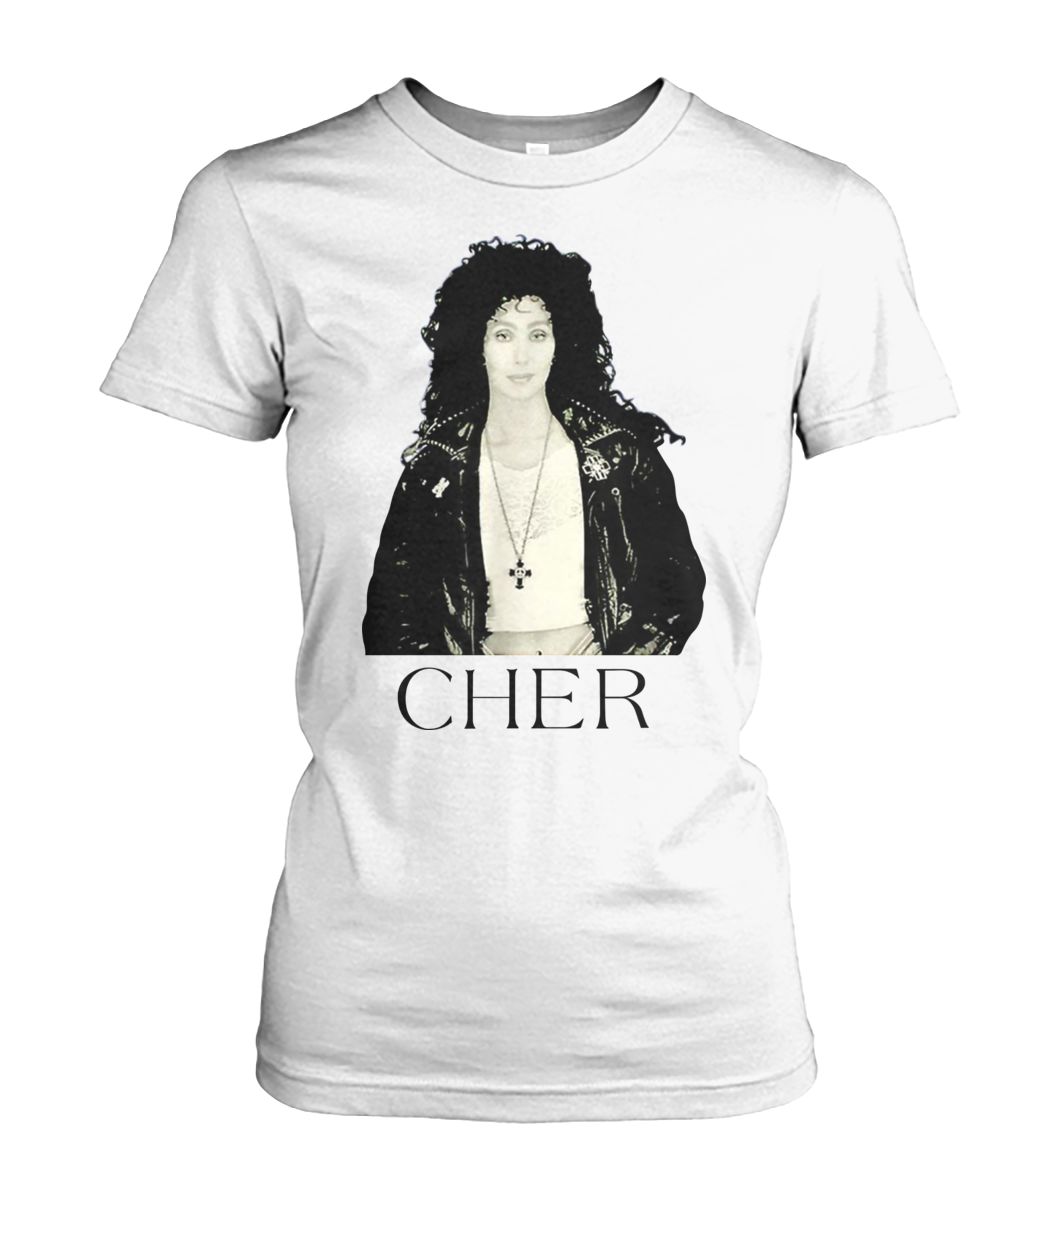 Cher dressed to kill tour women's crew tee